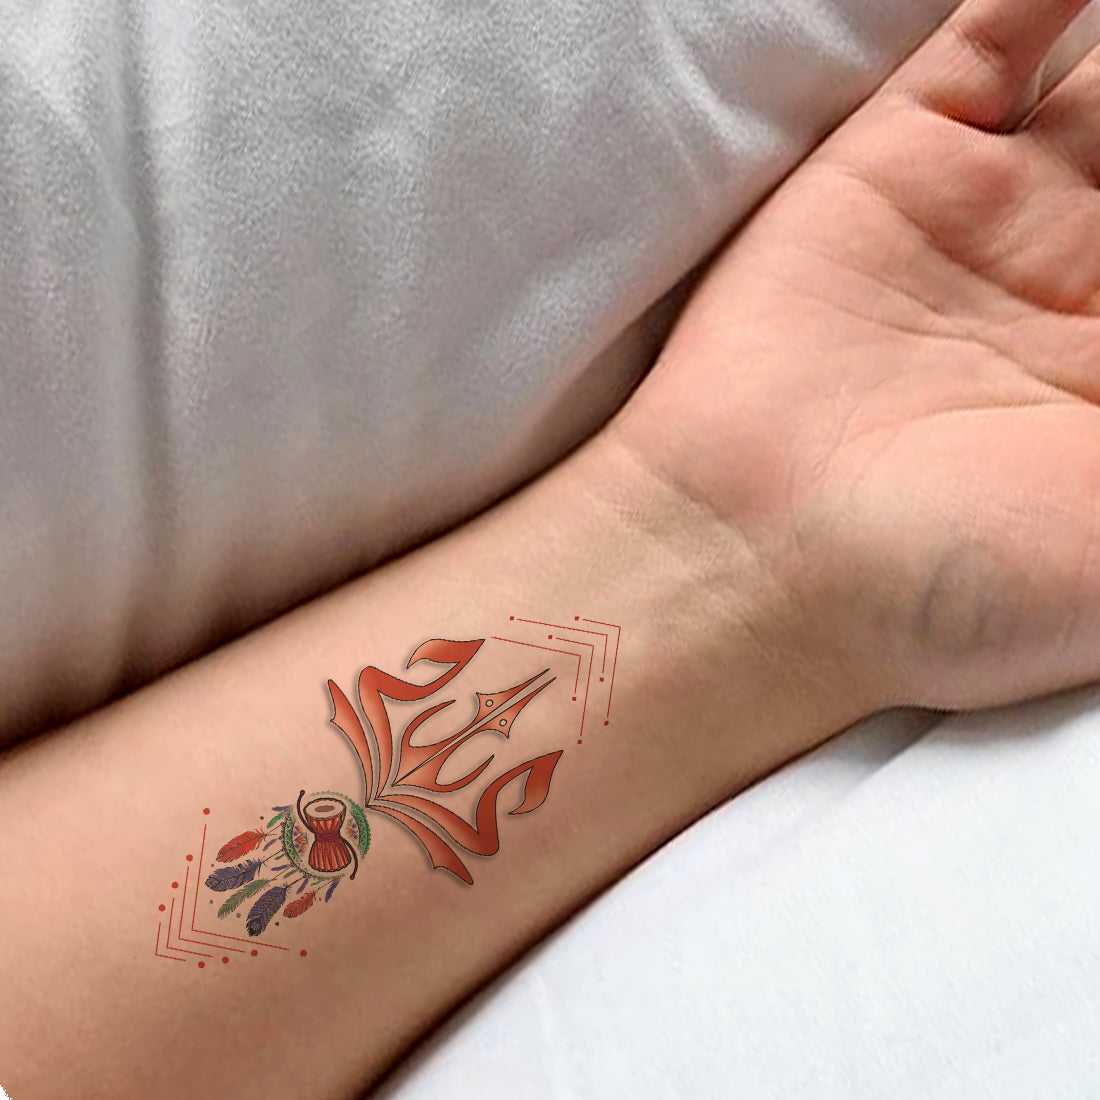 Virat Kolhi tattoo: What is the meaning of Virat Kolhi's latest tattoo?  Artist reveals - The Economic Times